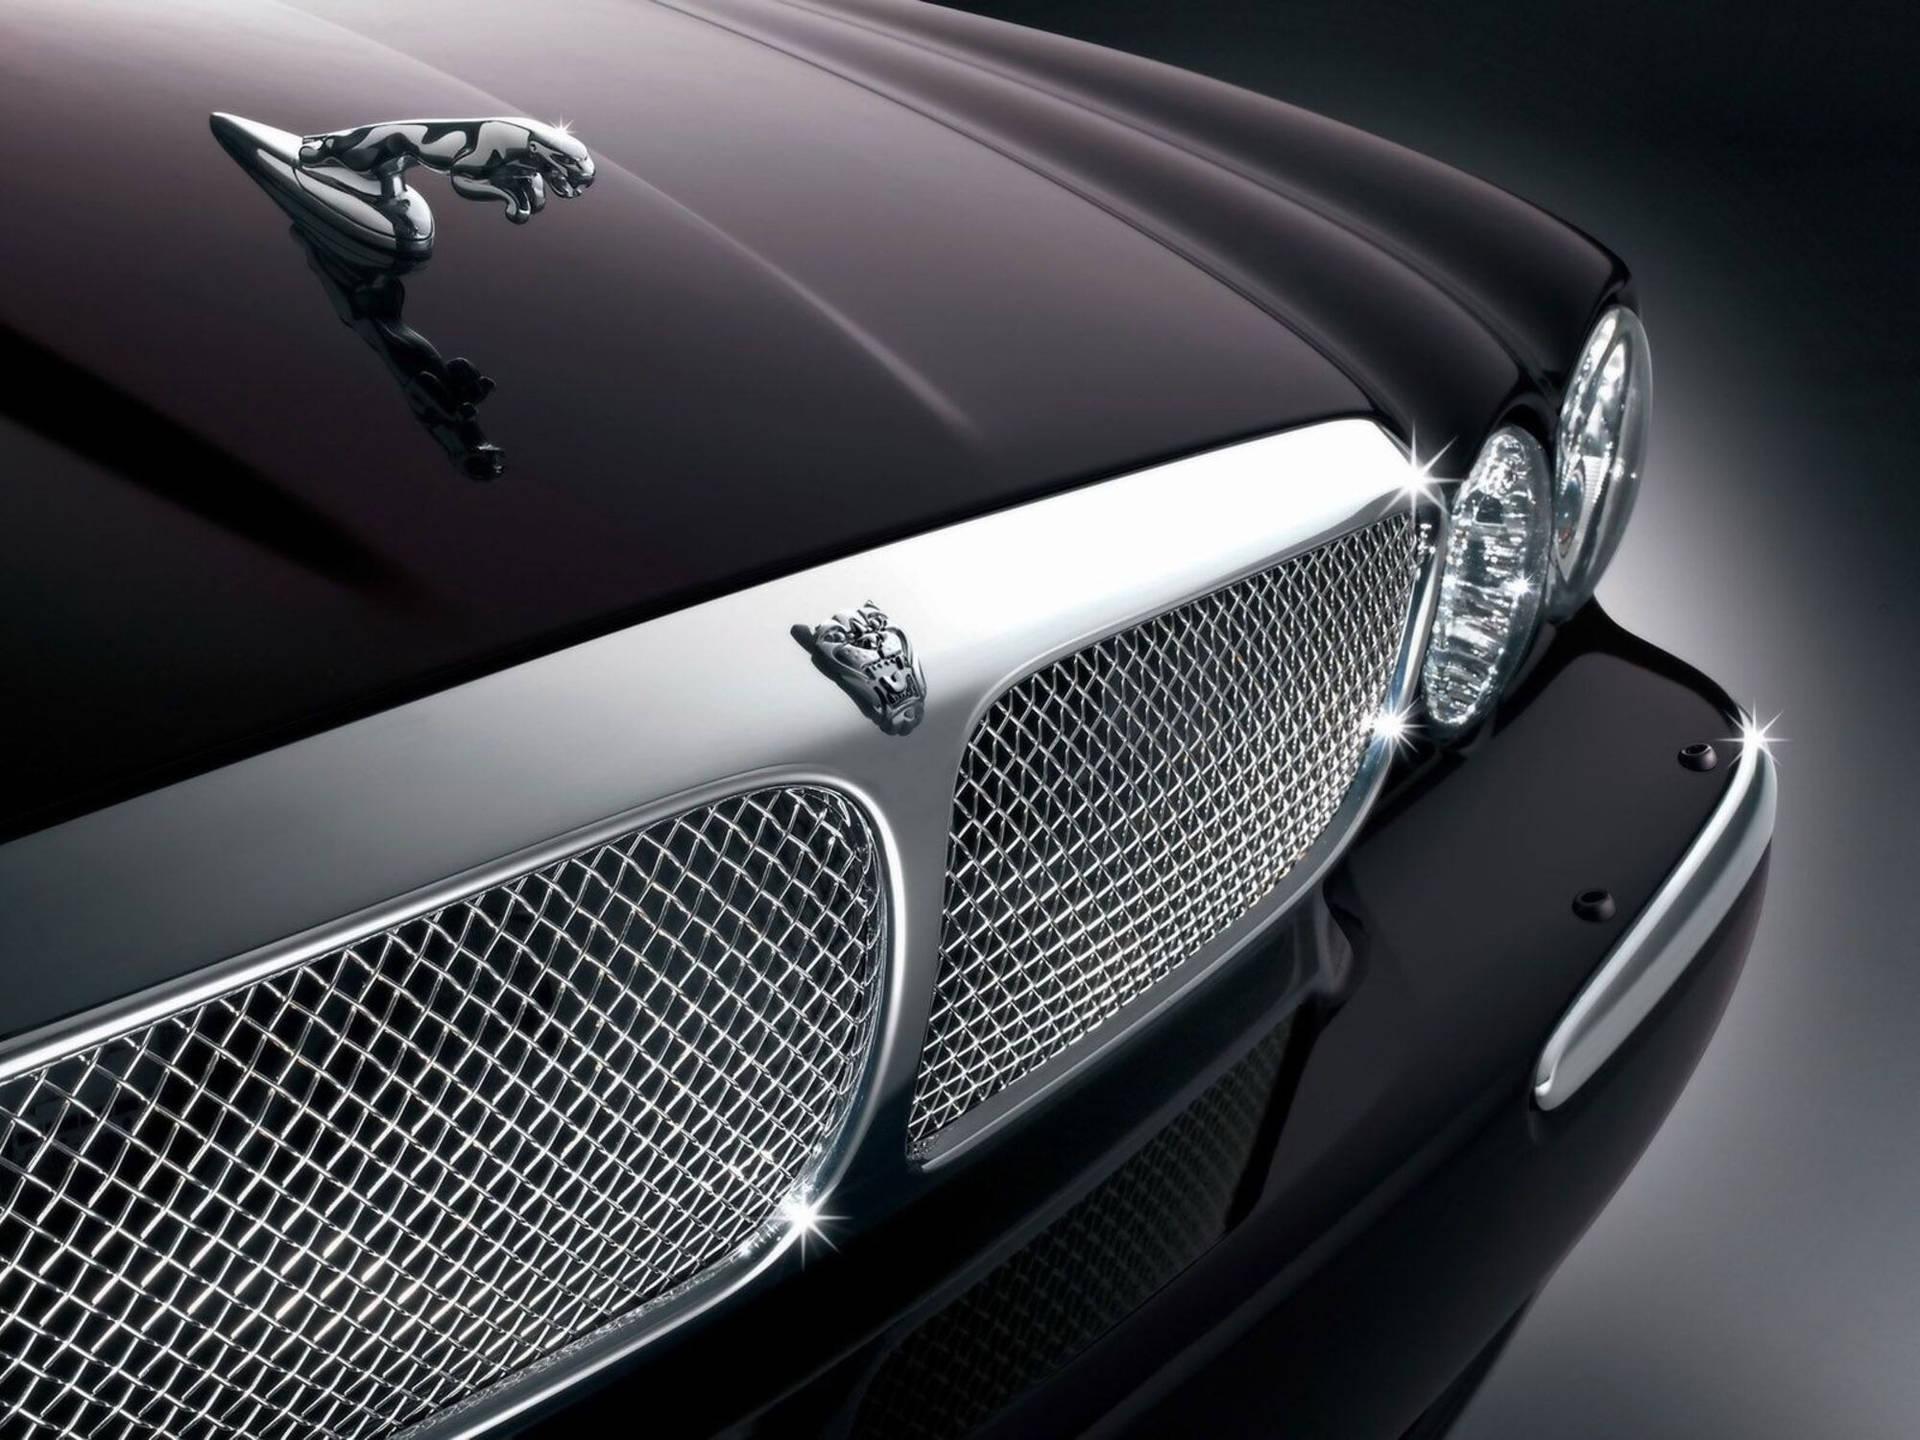 A Closer Look At The Sleek Monochrome Front Bumper Of A Jaguar Car